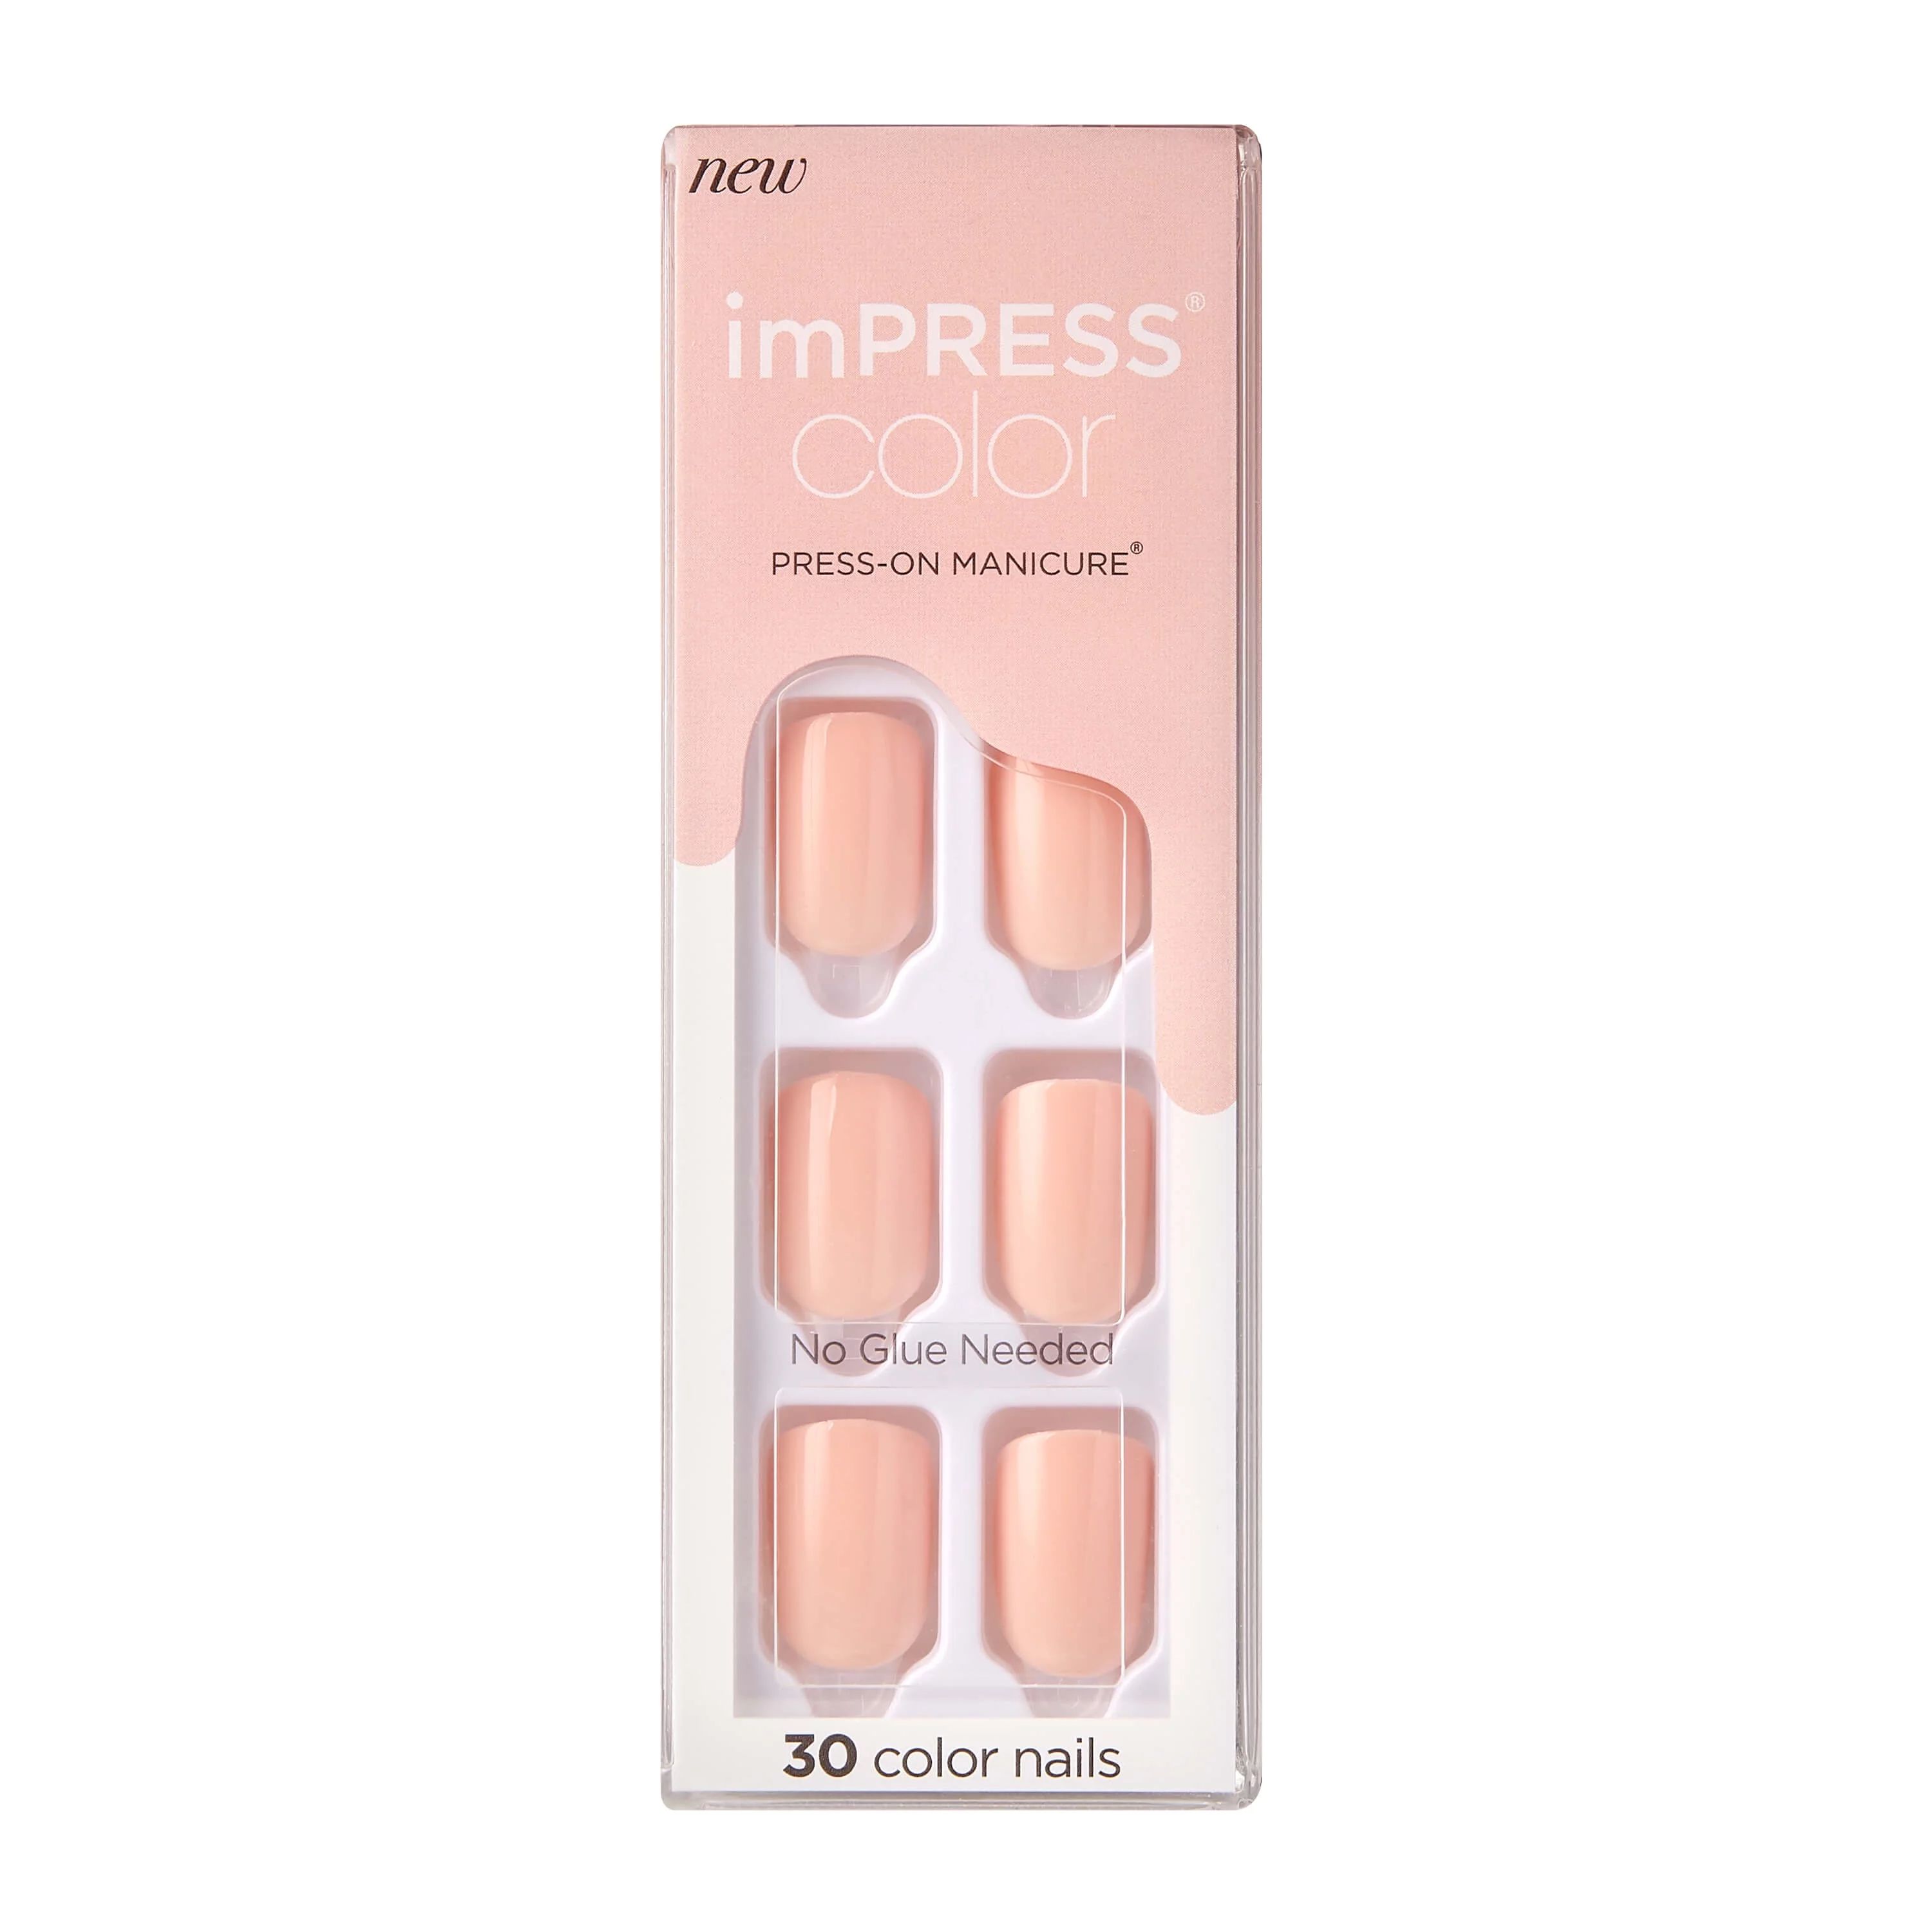 imPRESS Color Press-on Manicure, Peevish Pink, Short | Walmart (US)